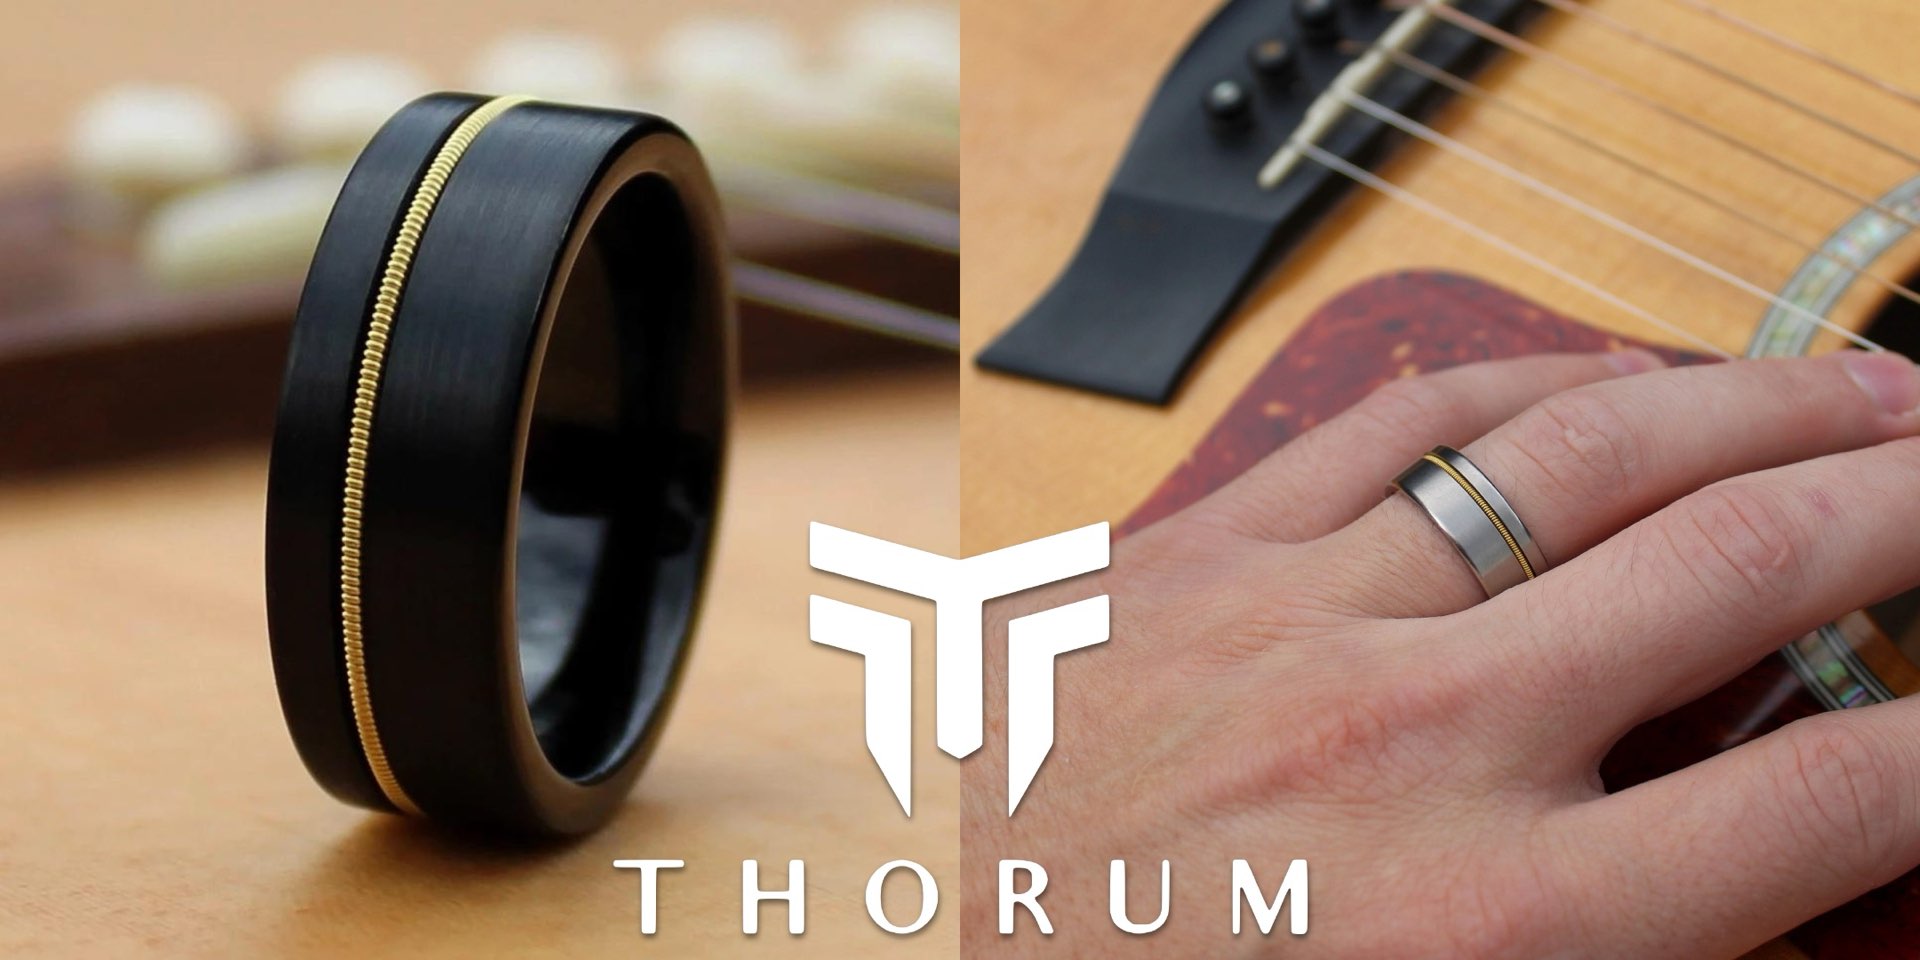 guitar-string-ring-maker-anvil-rings-is-now-thorum